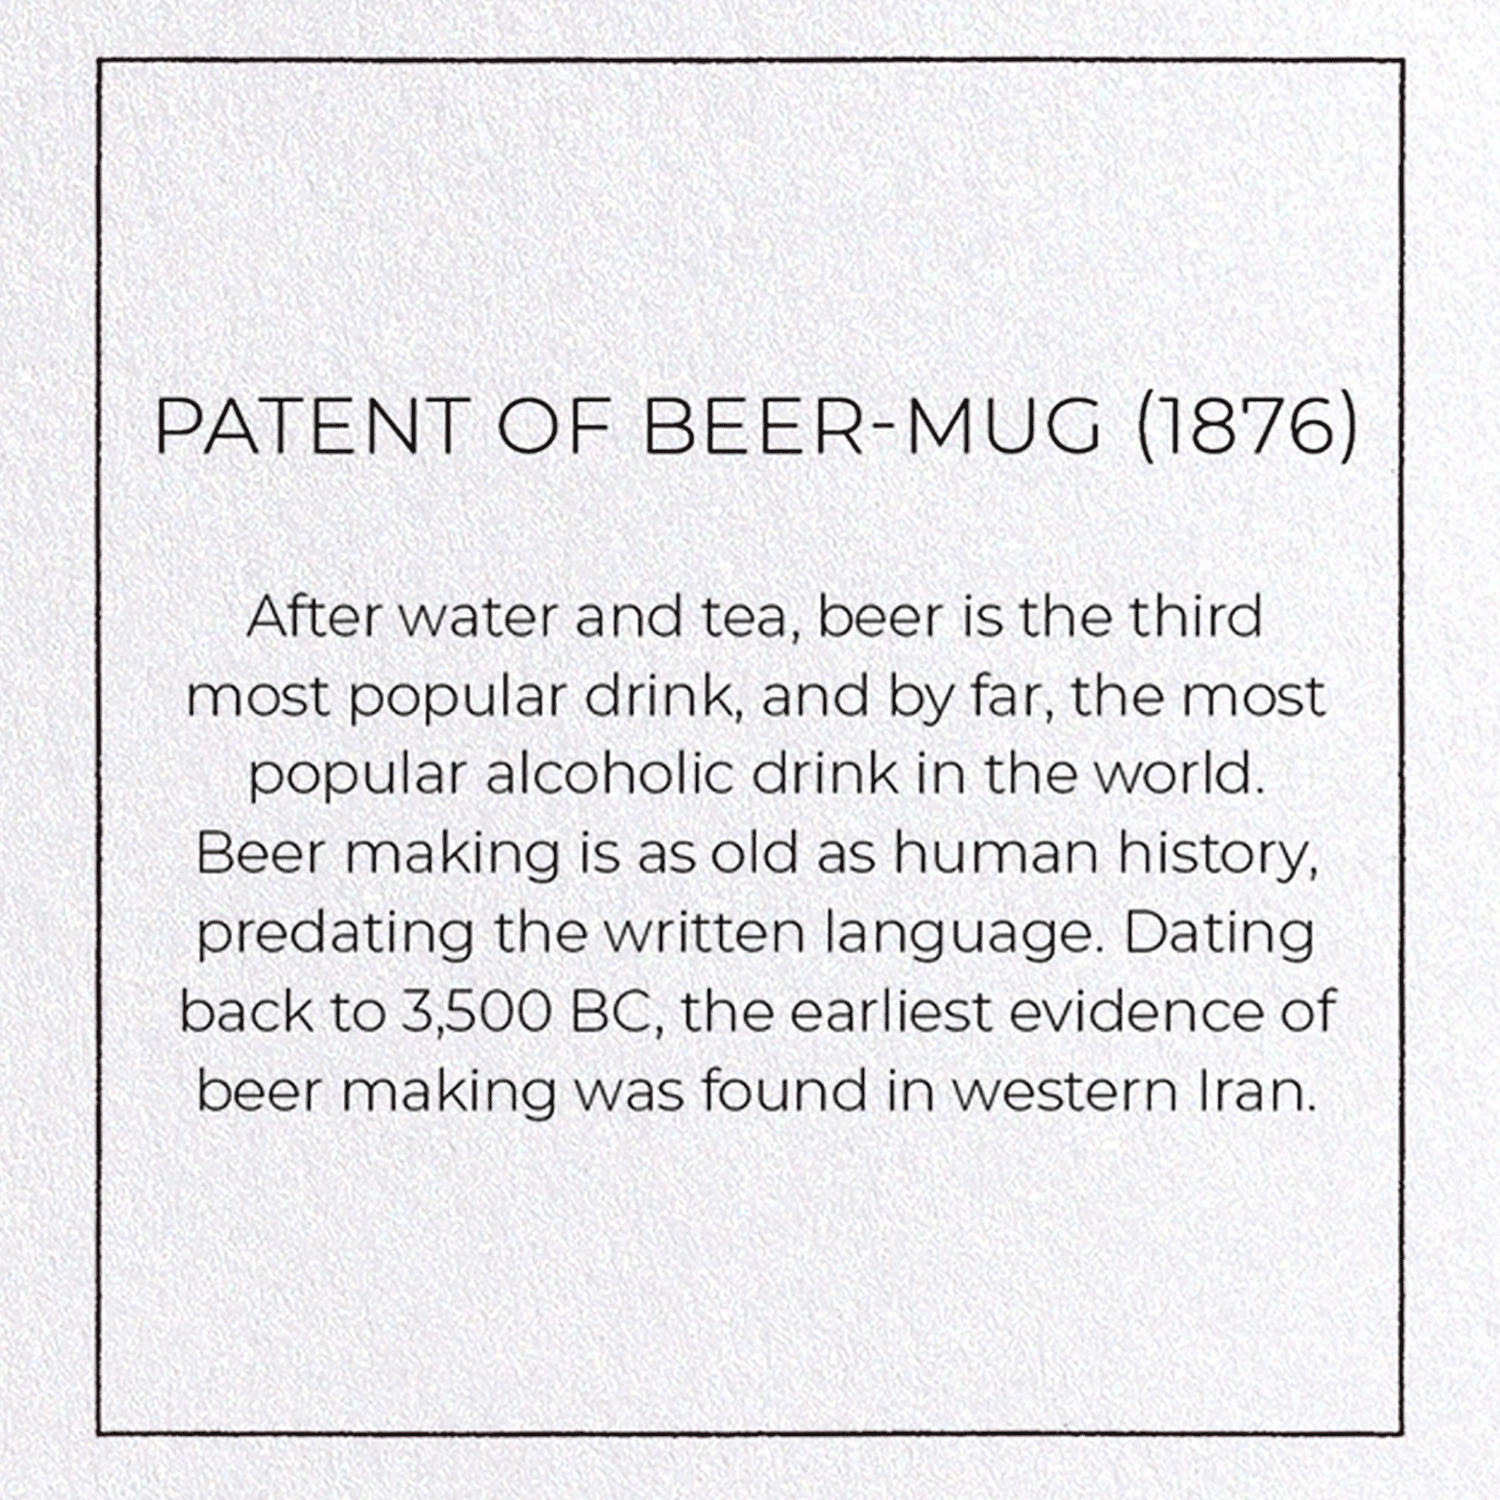 PATENT OF BEER-MUG (1876)